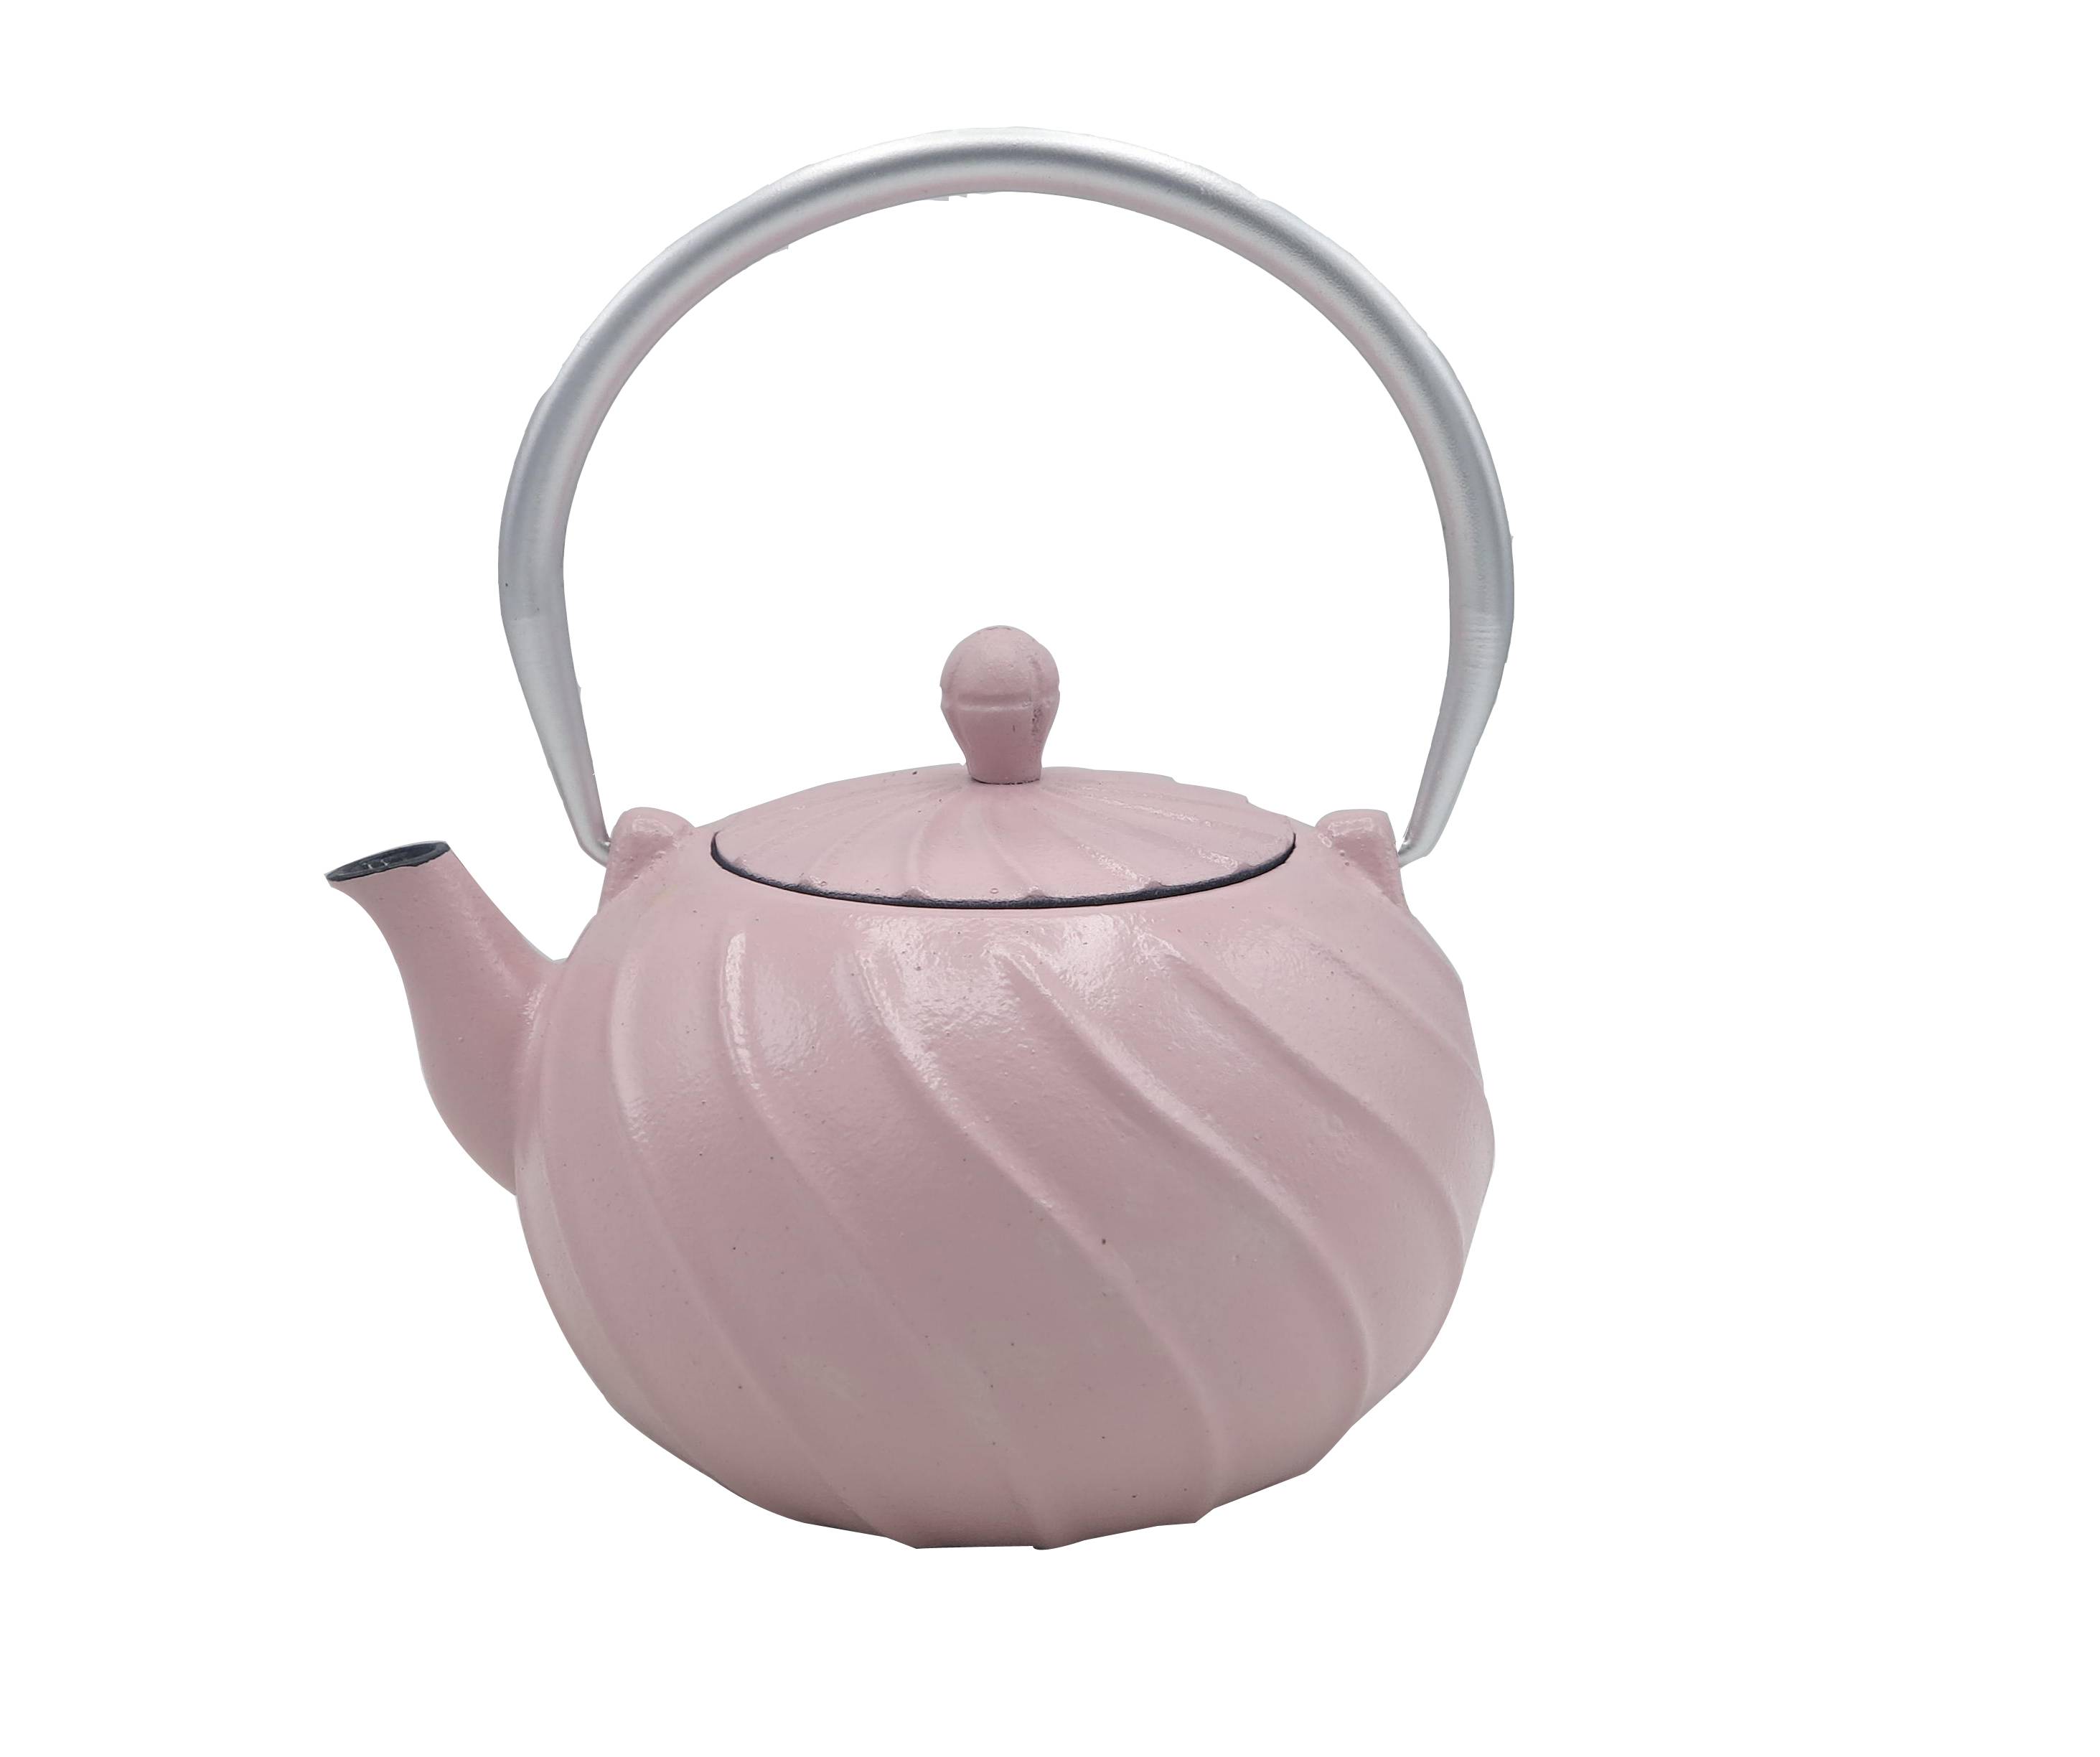 Factory New Design antigong japanese Enamel cast iron teapot kettle na May Stainless Steel Tea Strainer